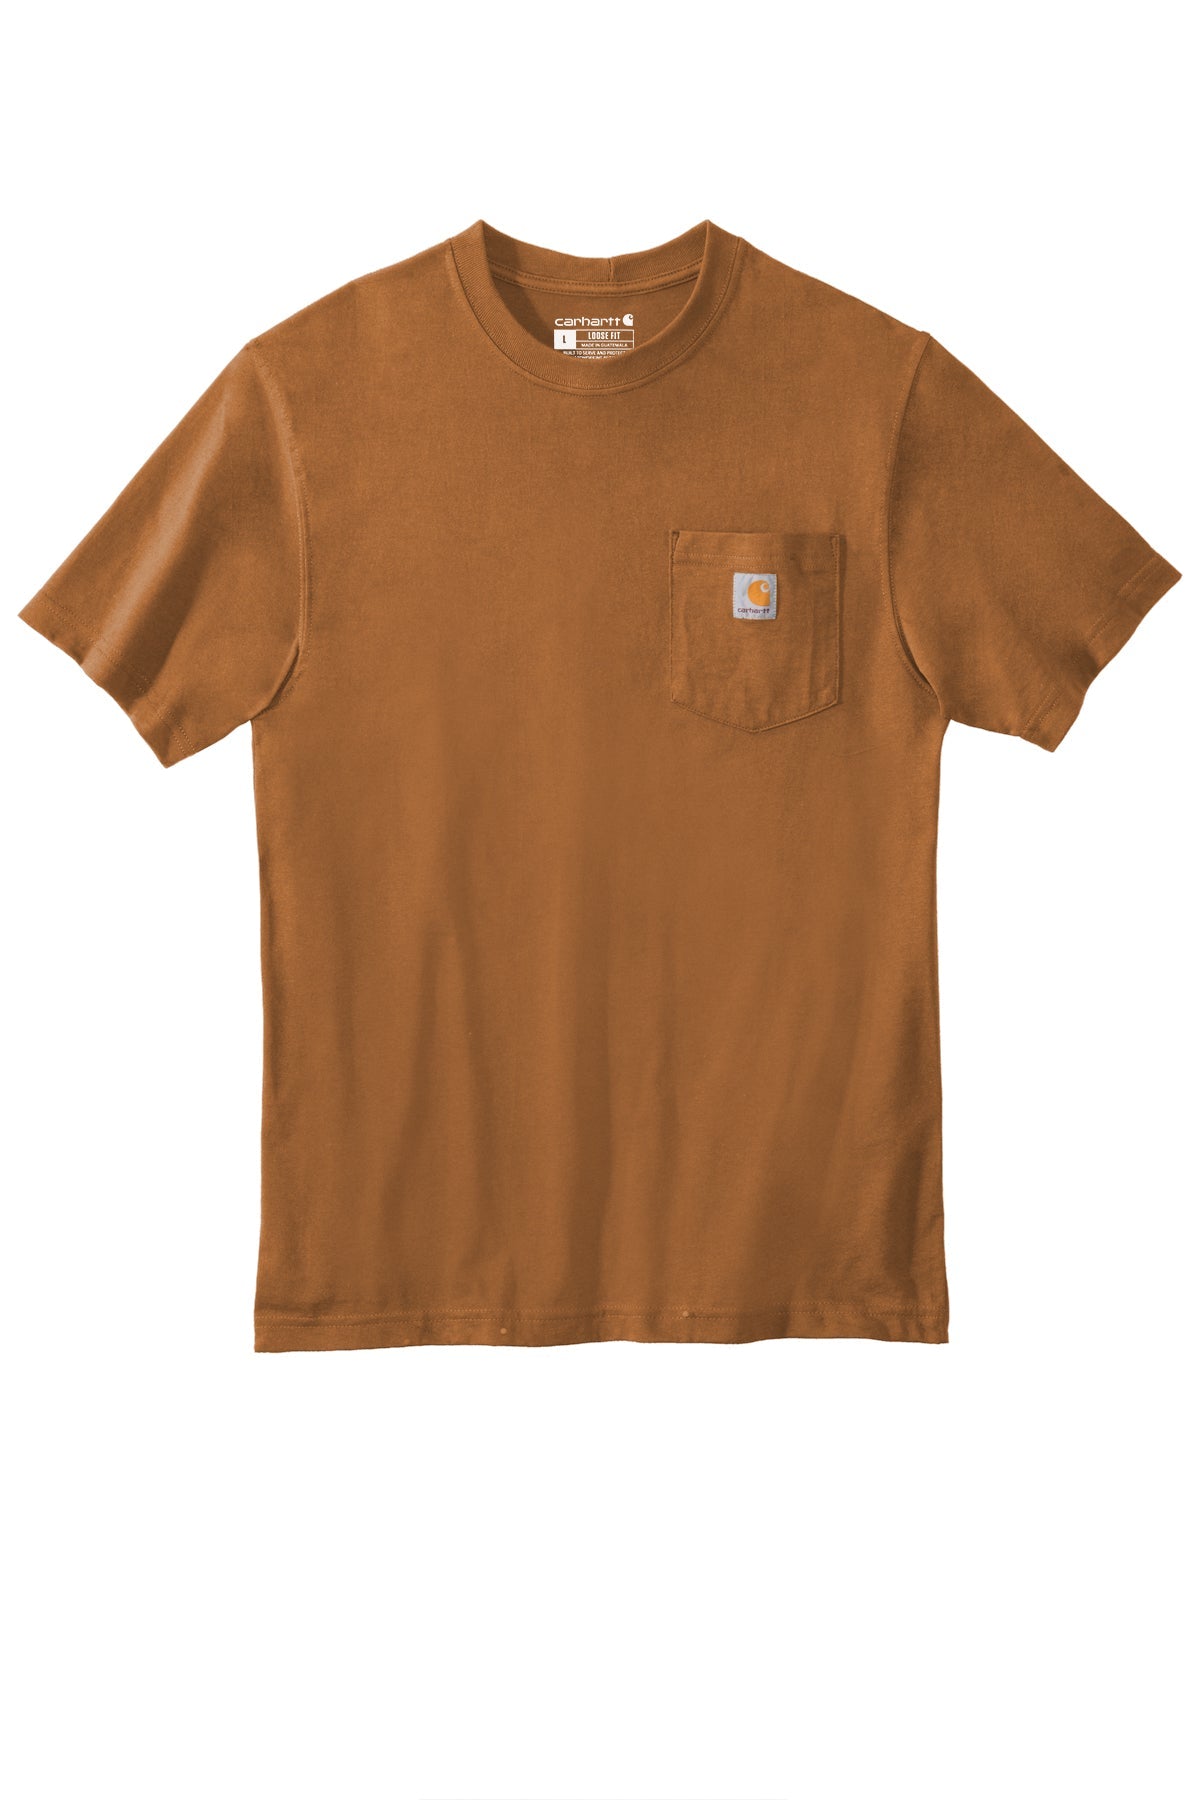 CTK87 Carhartt ® Workwear Pocket Short Sleeve T-Shirt- S-4XL